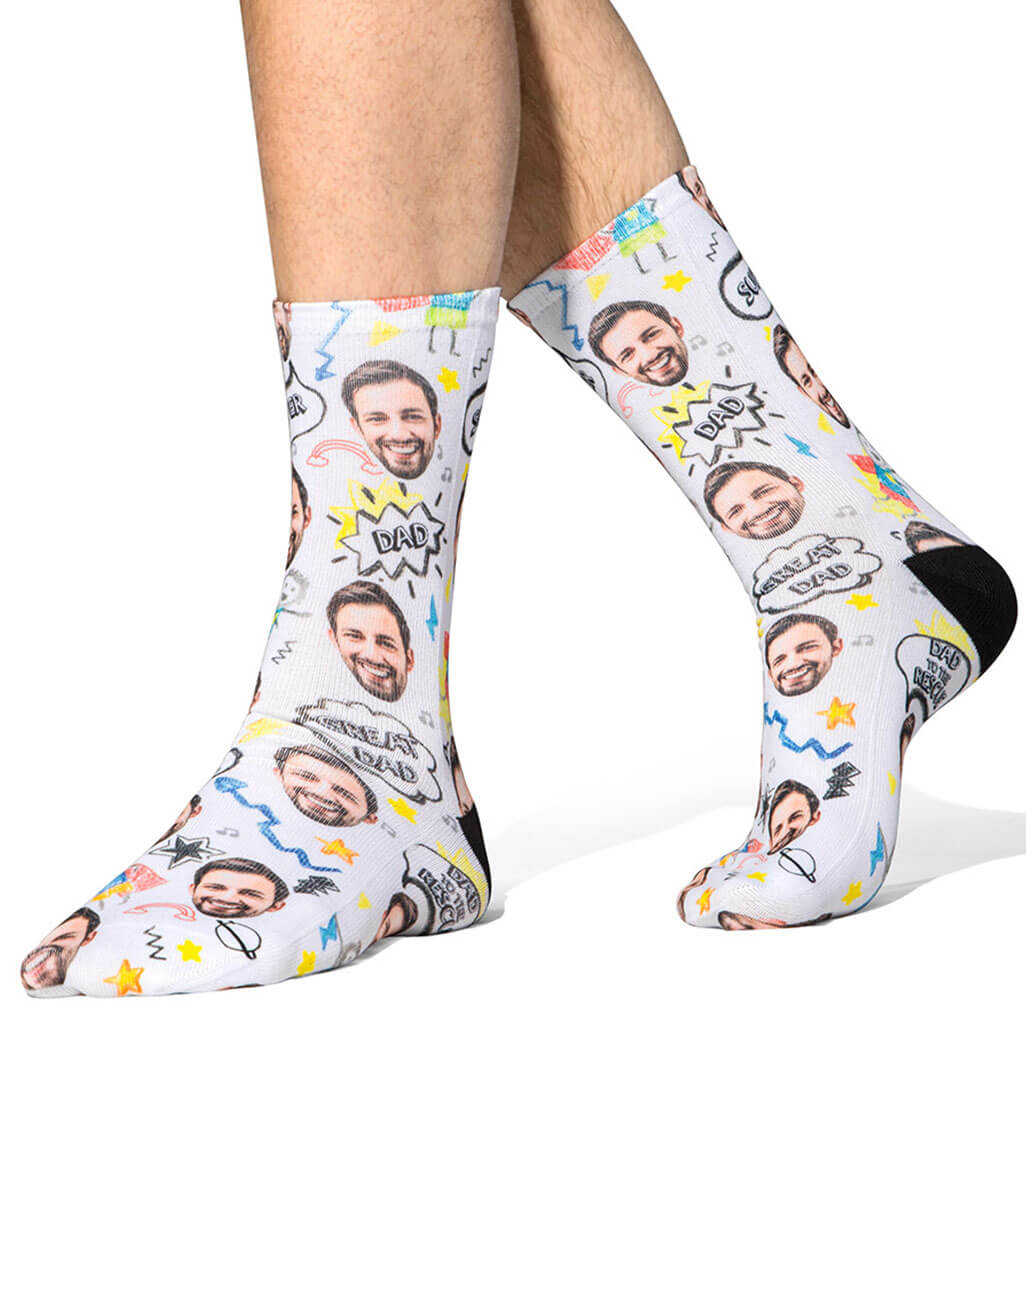 Great Dad Face Custom Socks